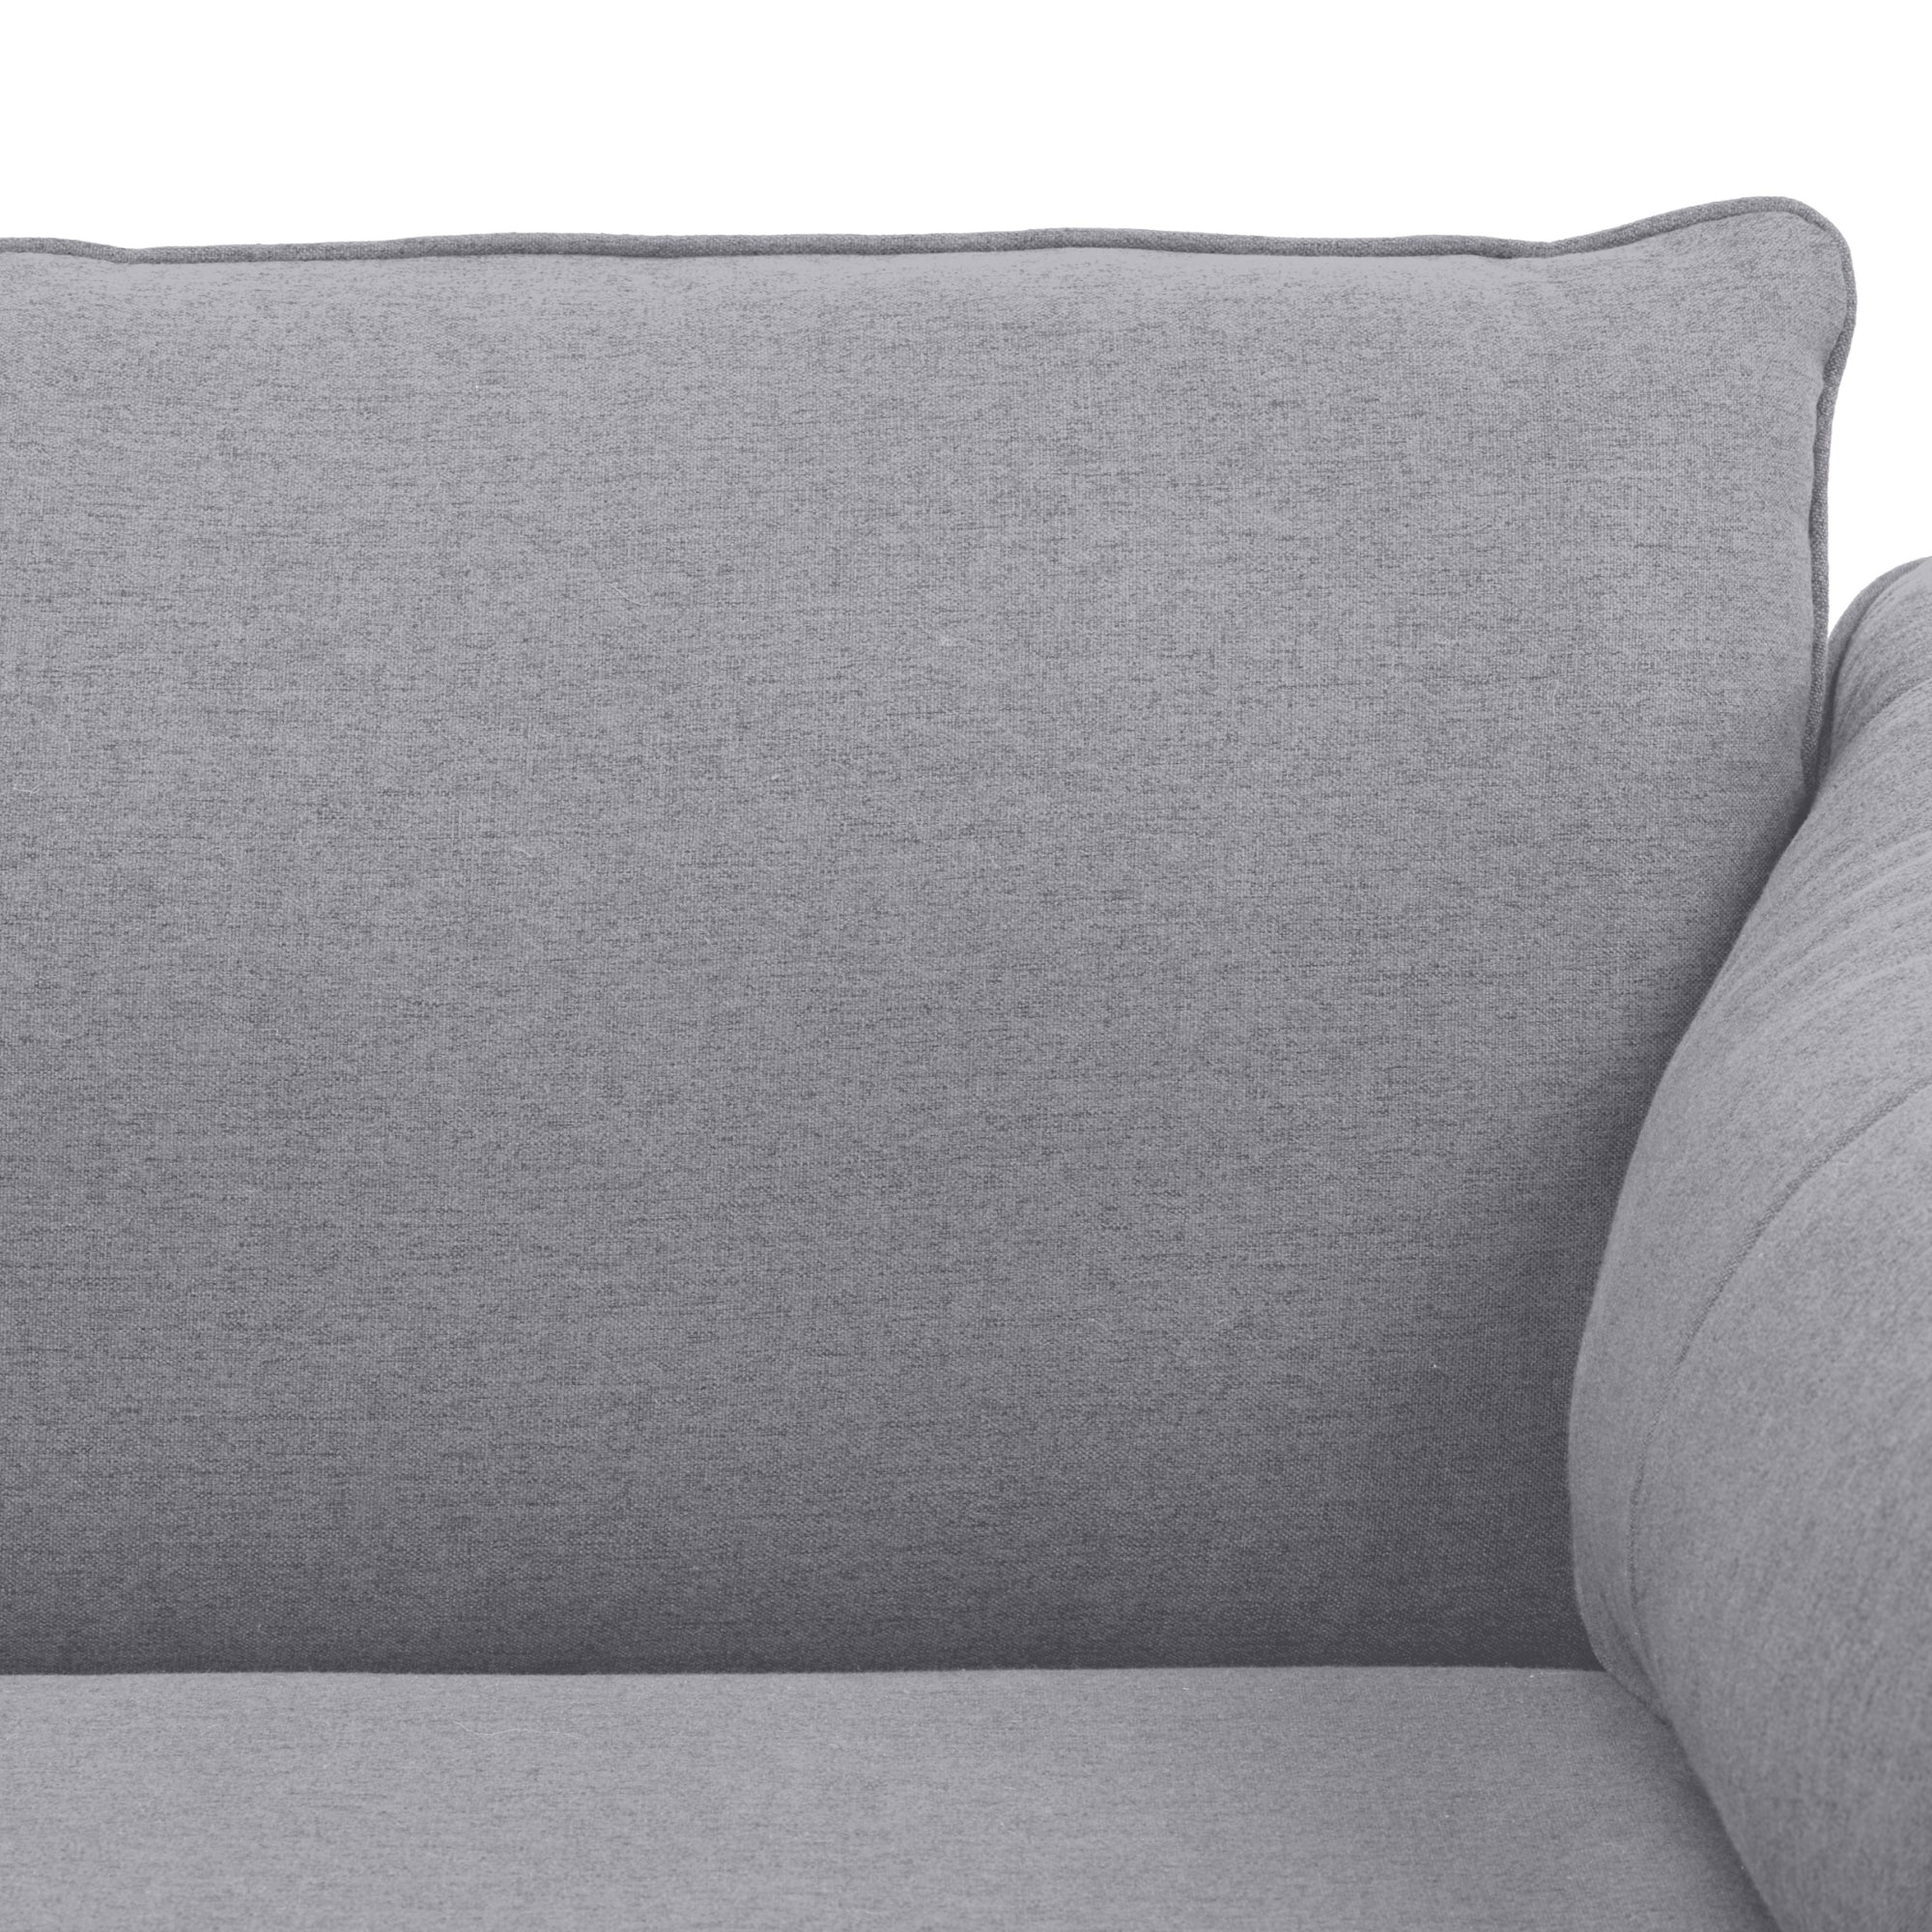 Grey 3-Seater Fabric Sofa, S Springs, Metal Legs - Scandinavian Style